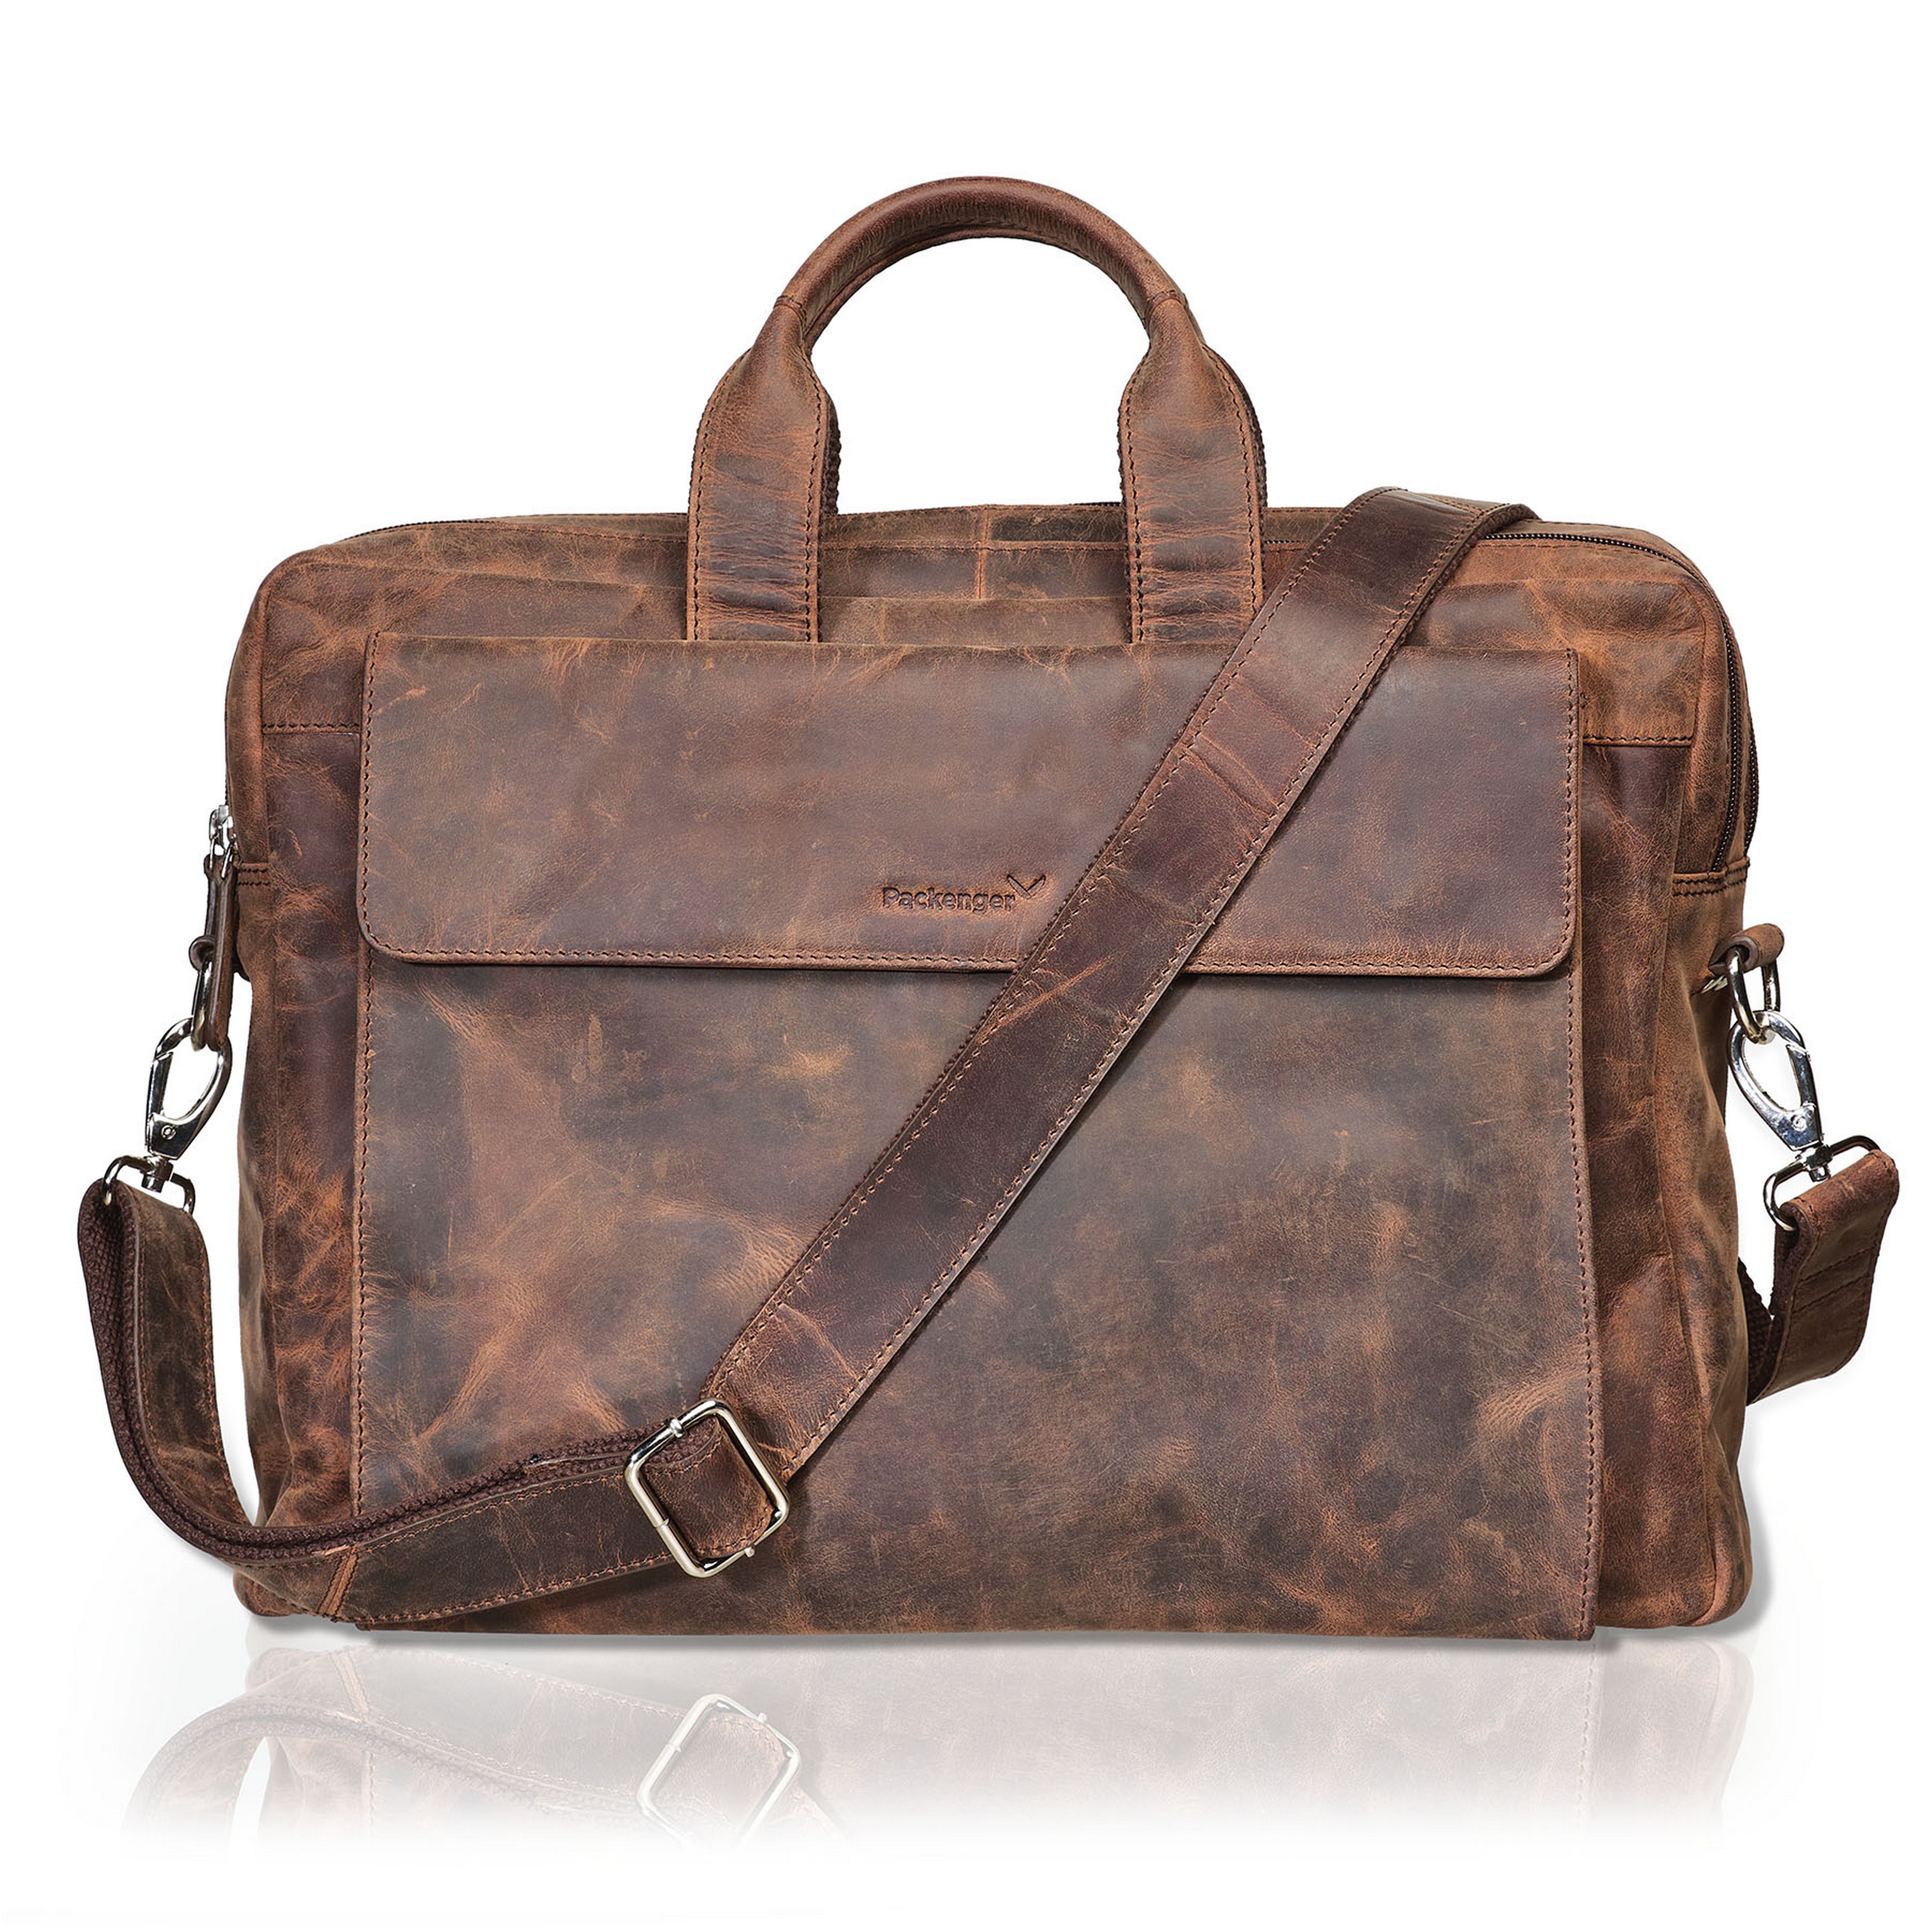 Packenger Messenger Bag ODIN Ledertasche in Vintage Braun